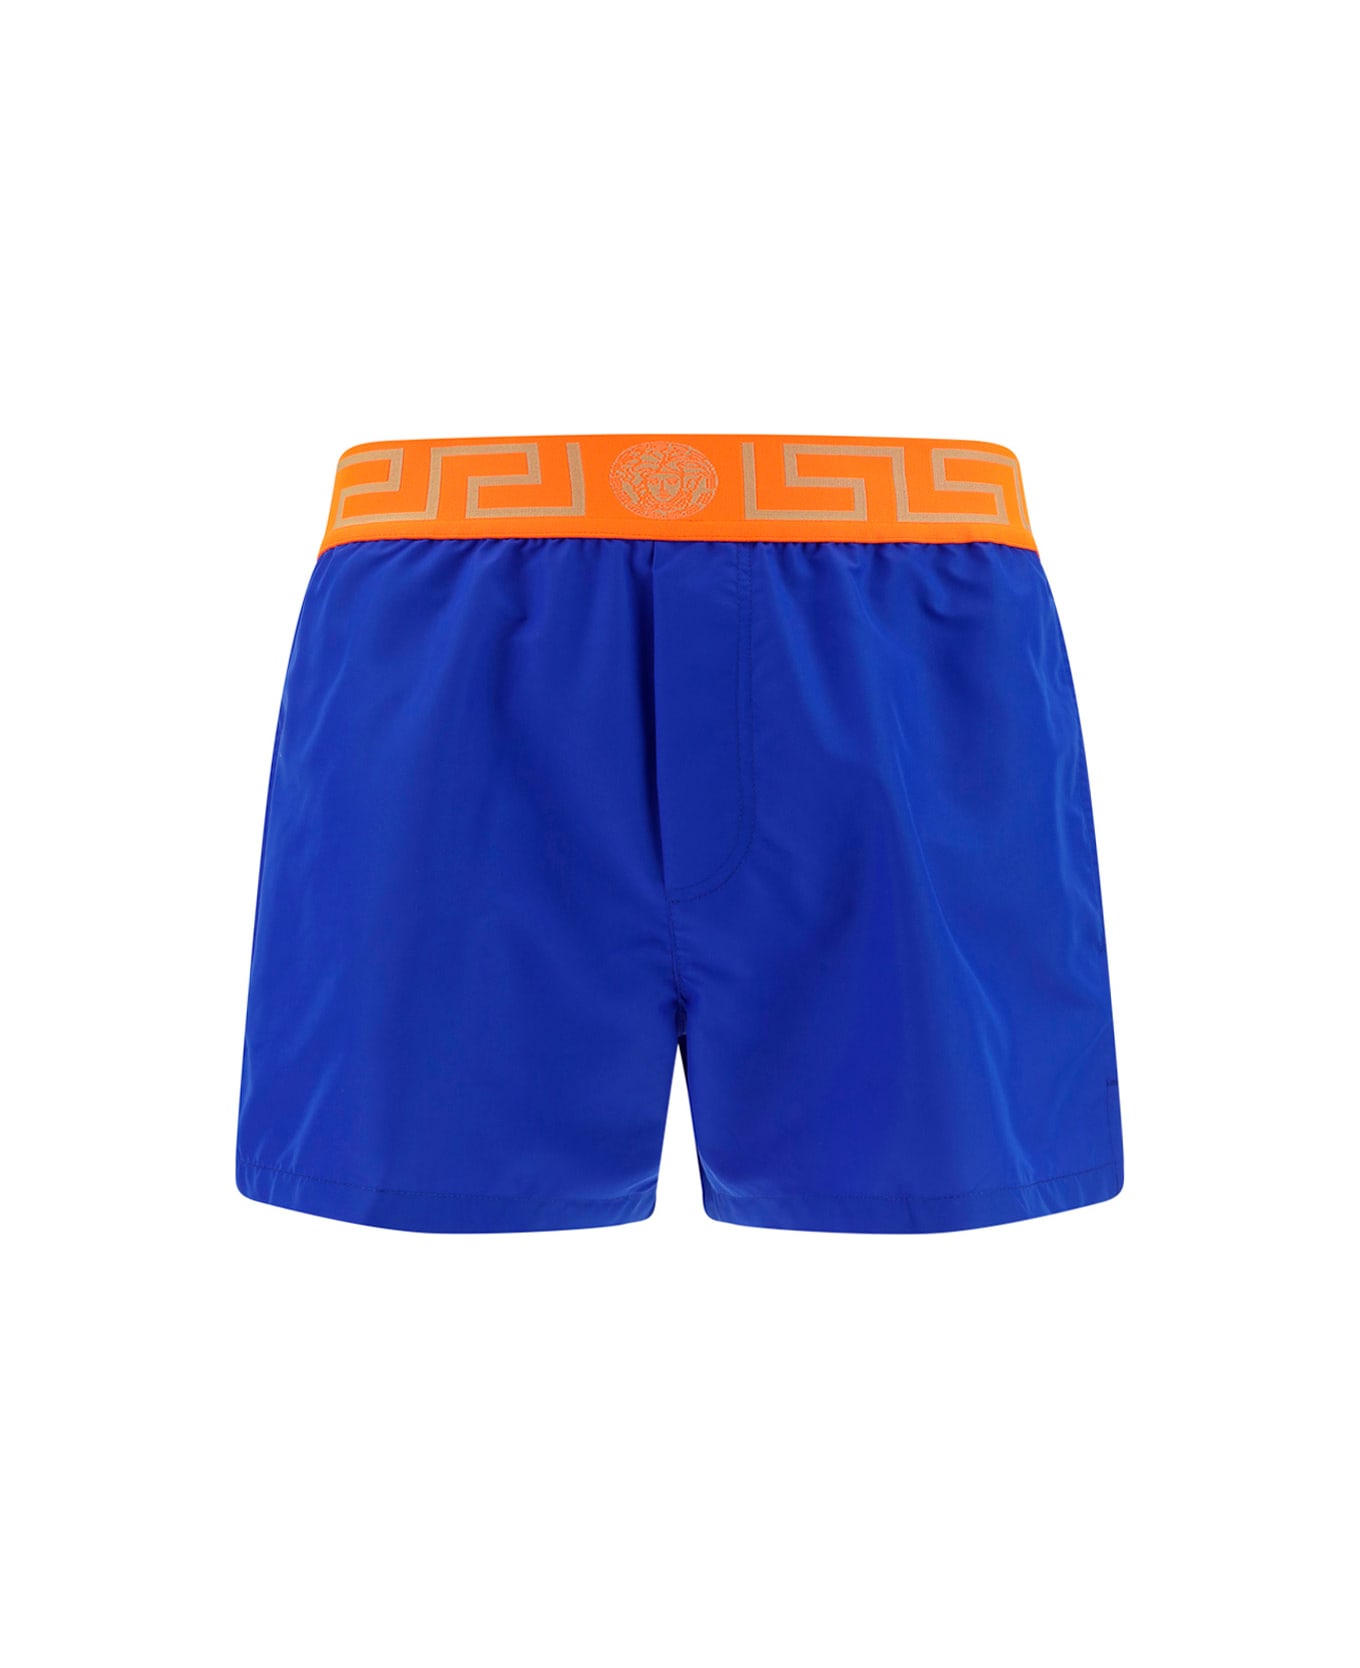 Versace Swimsuit - Cobalt+arancio Fluo ショーツ